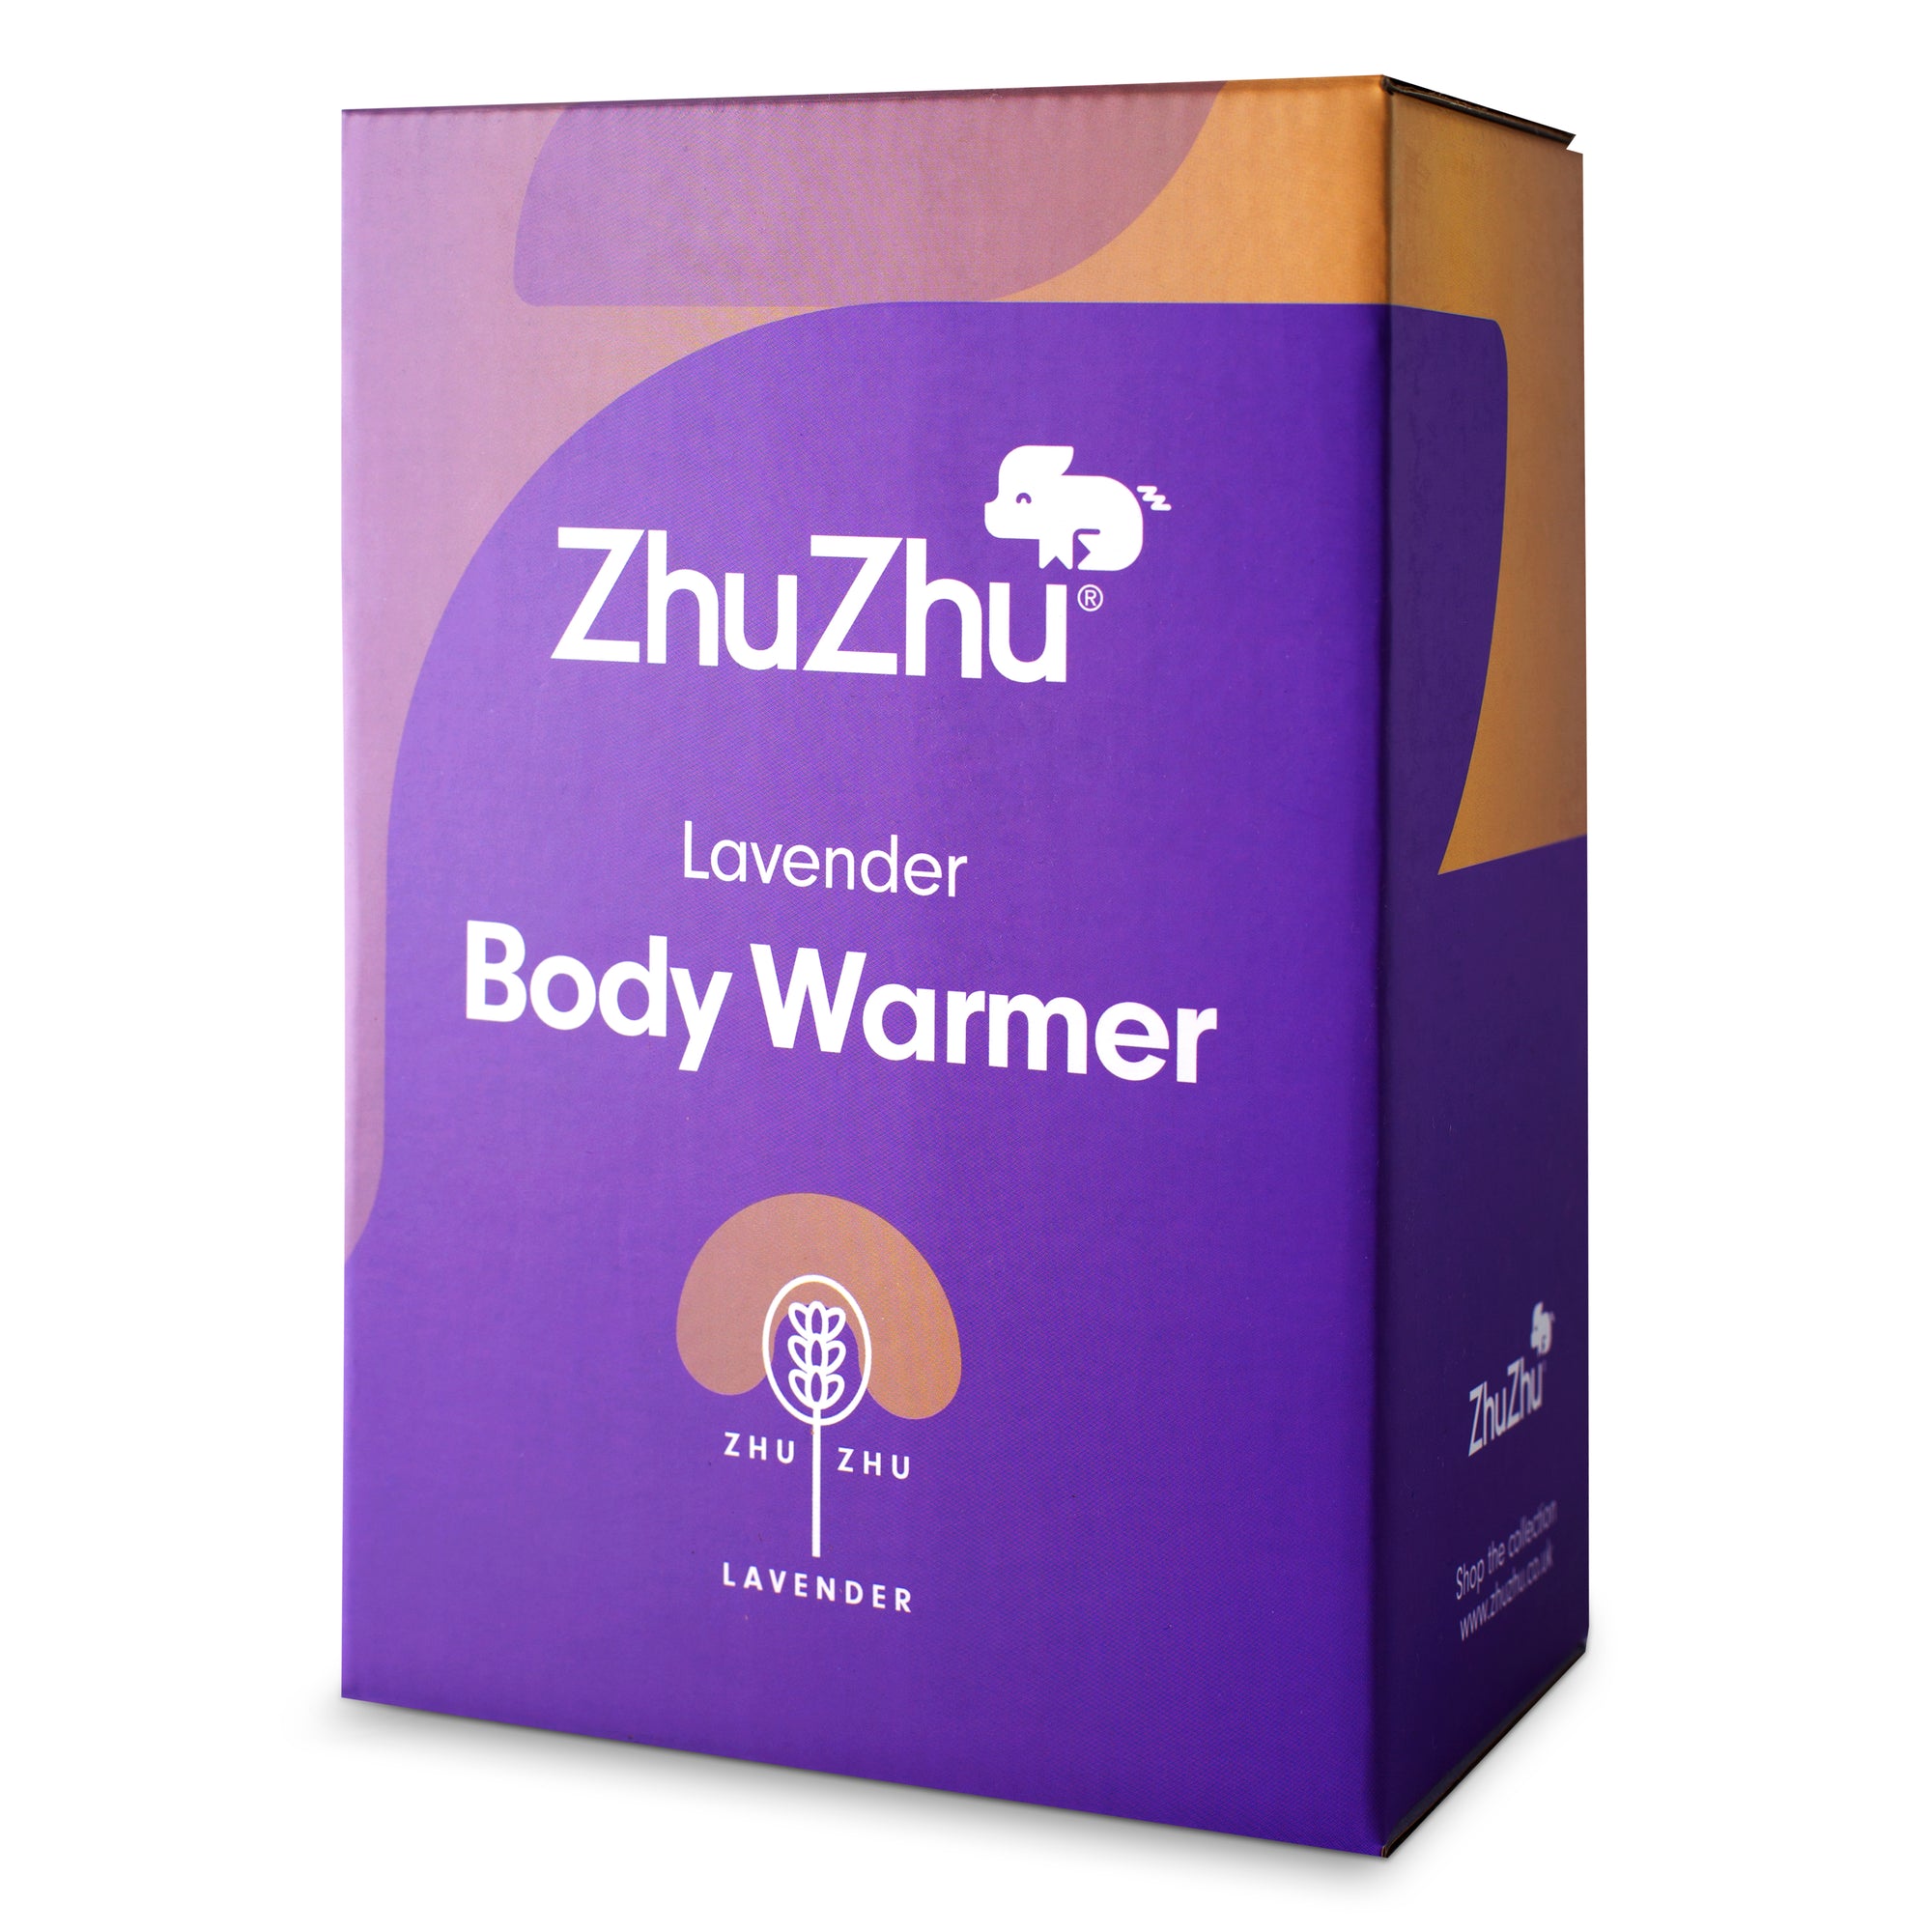 Zhu Zhu Lavender Body Warmer - Microwavable Wheat Bag Microwave Heat Pad